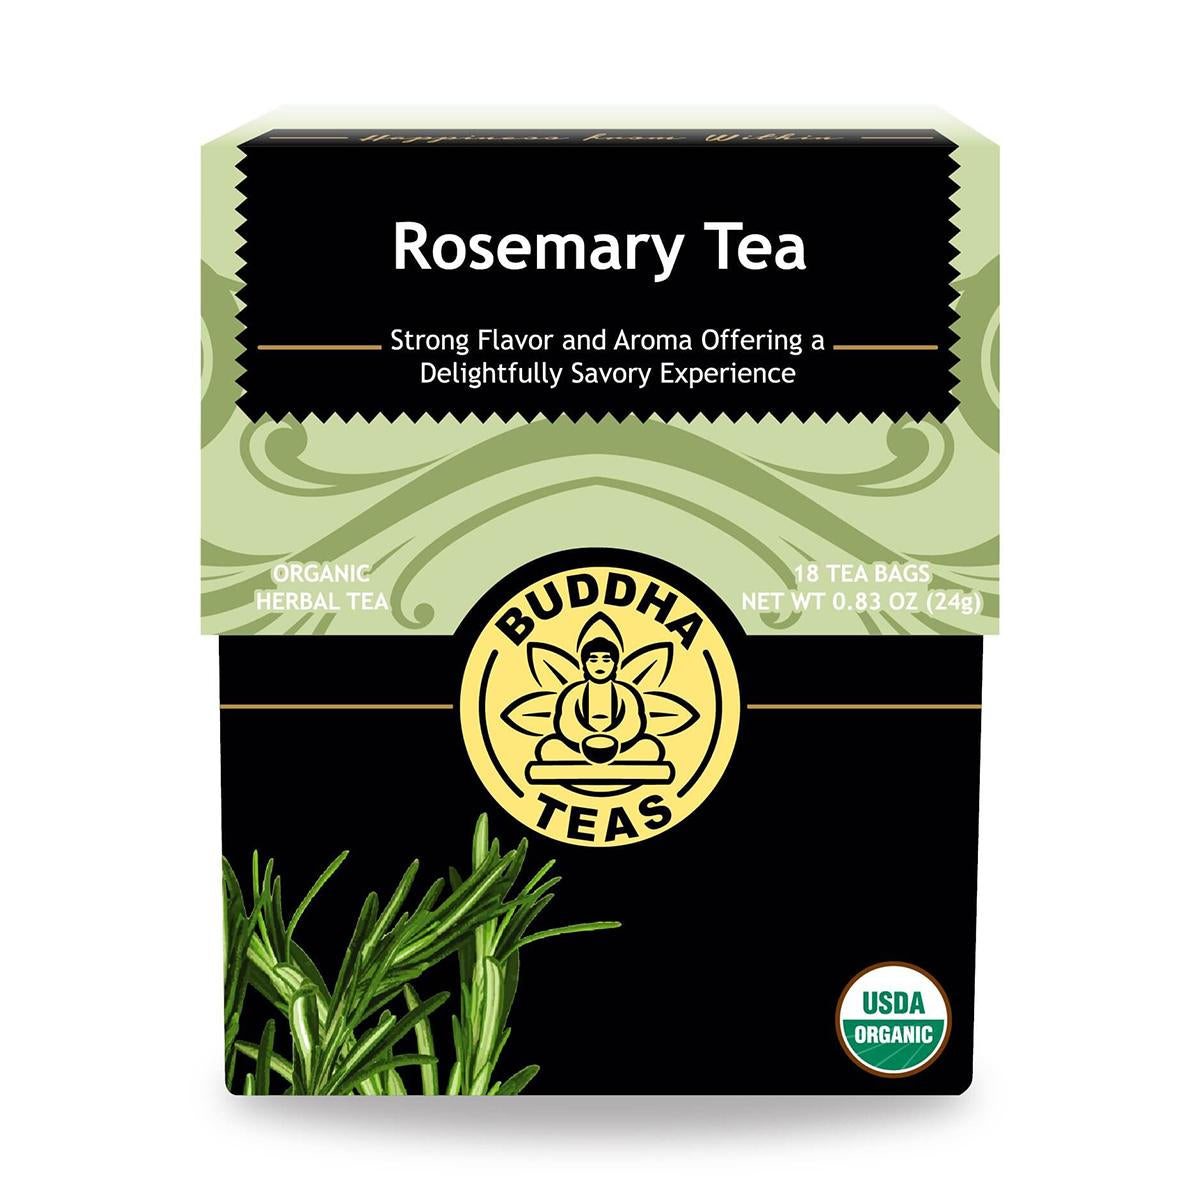 Primary image of Organic Rosemary Tea